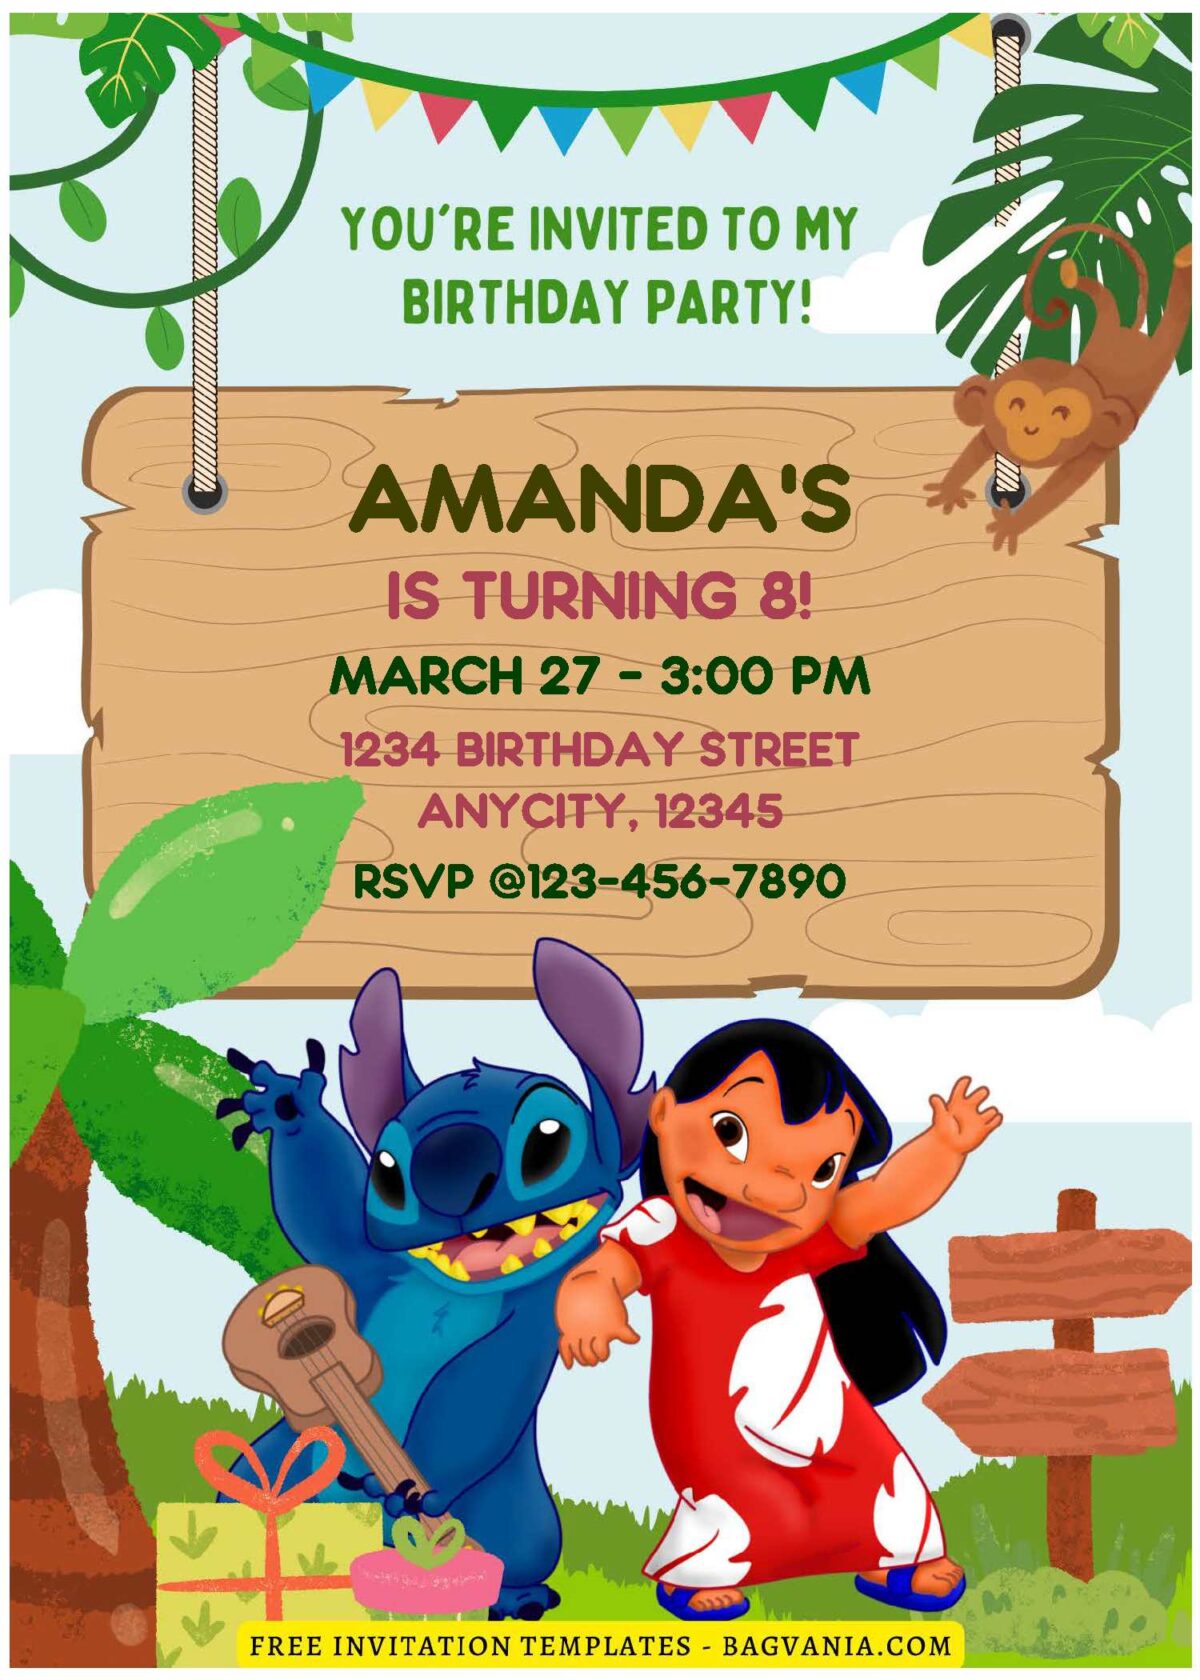 (Free Editable PDF) Jungle Bash Lilo & Stitch Birthday Invitation Templates F